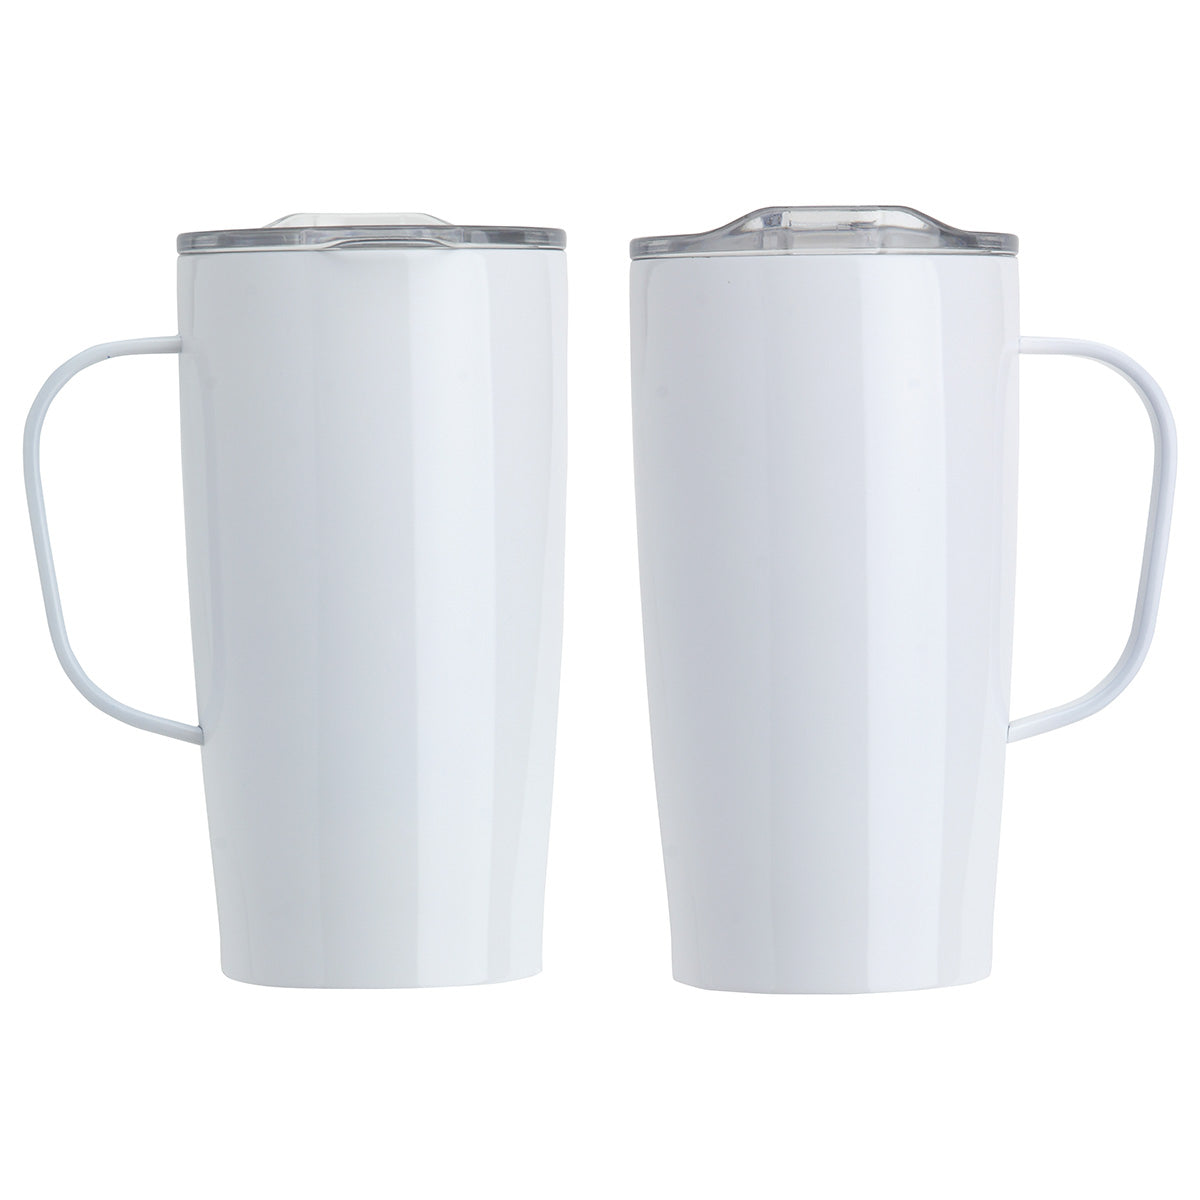 Mitre 20 oz Vacuum Insulated Stainless Steel Mug